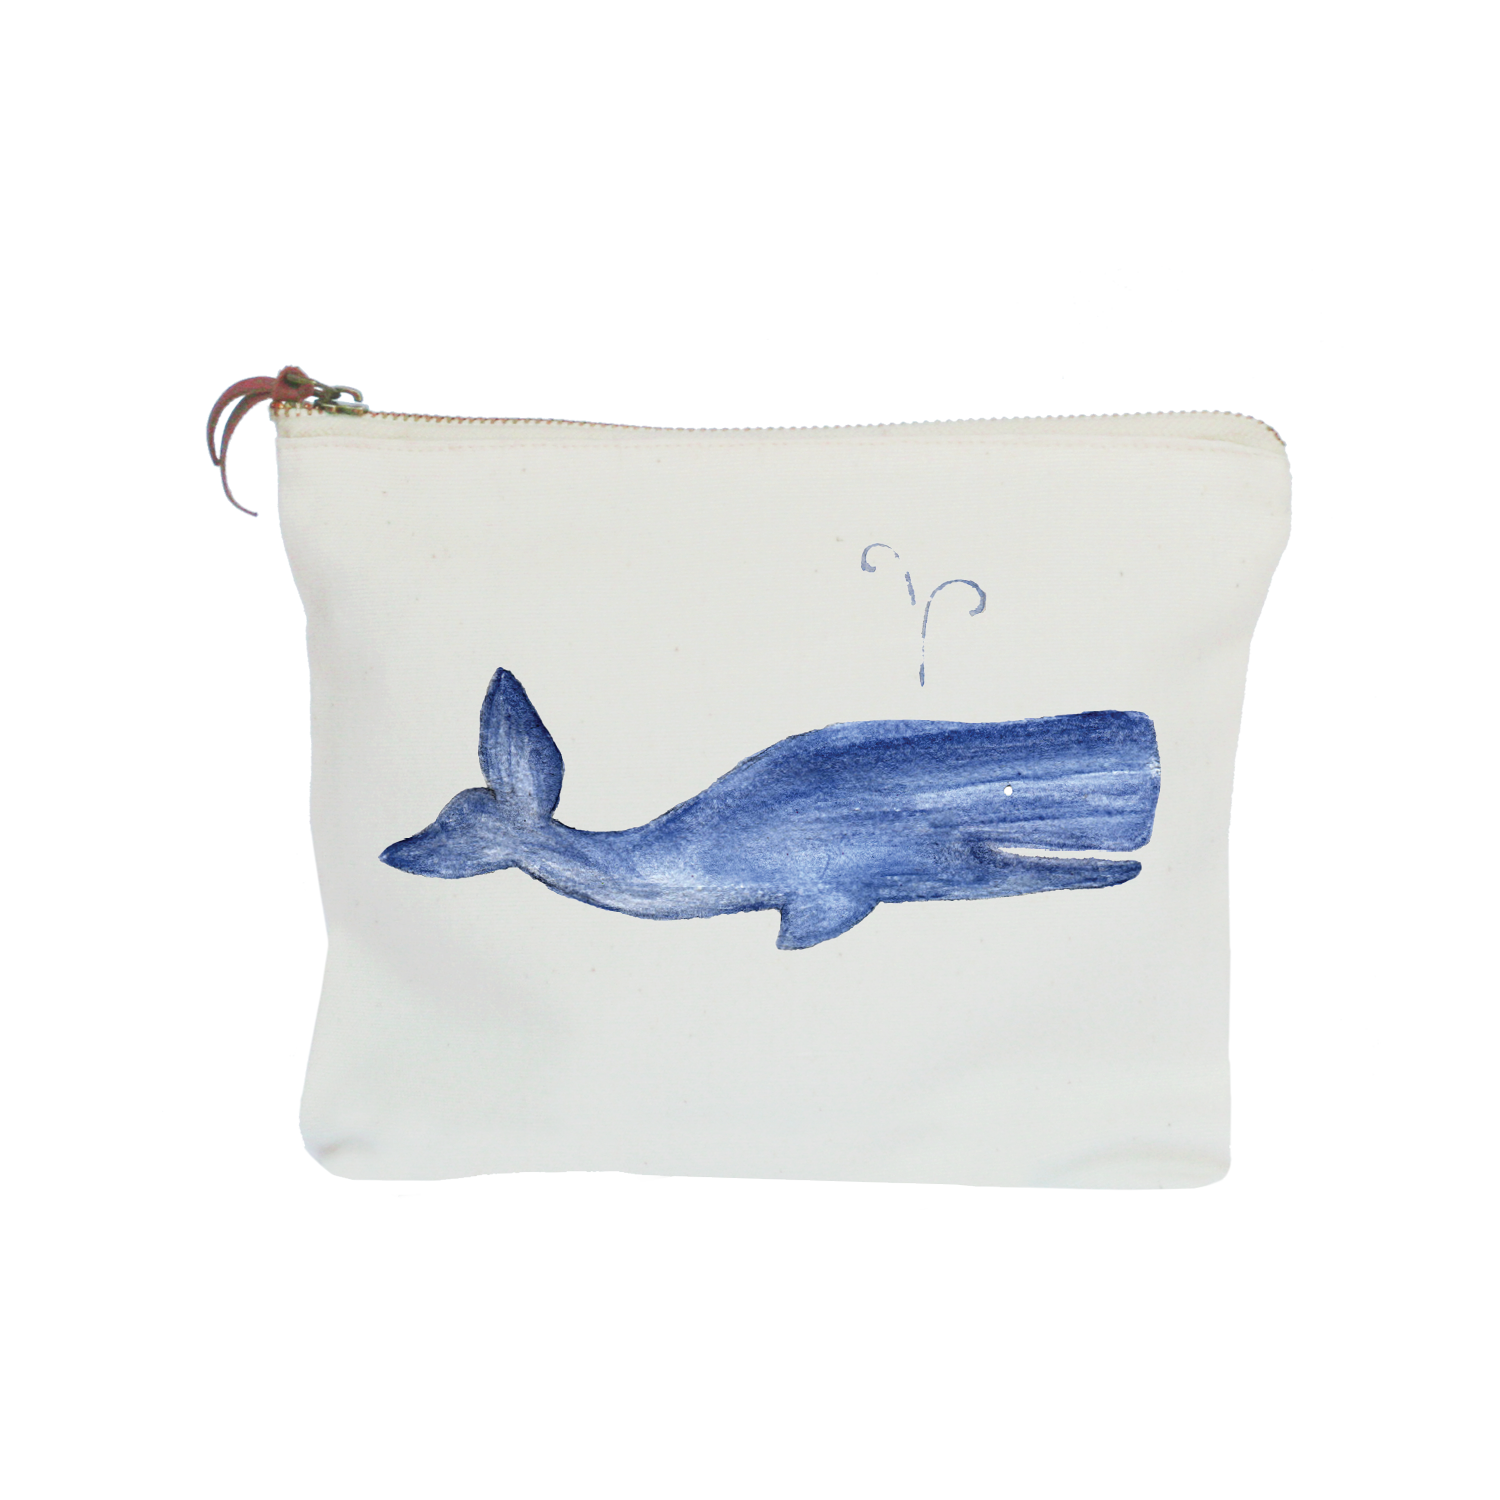 blue whale zipper pouch